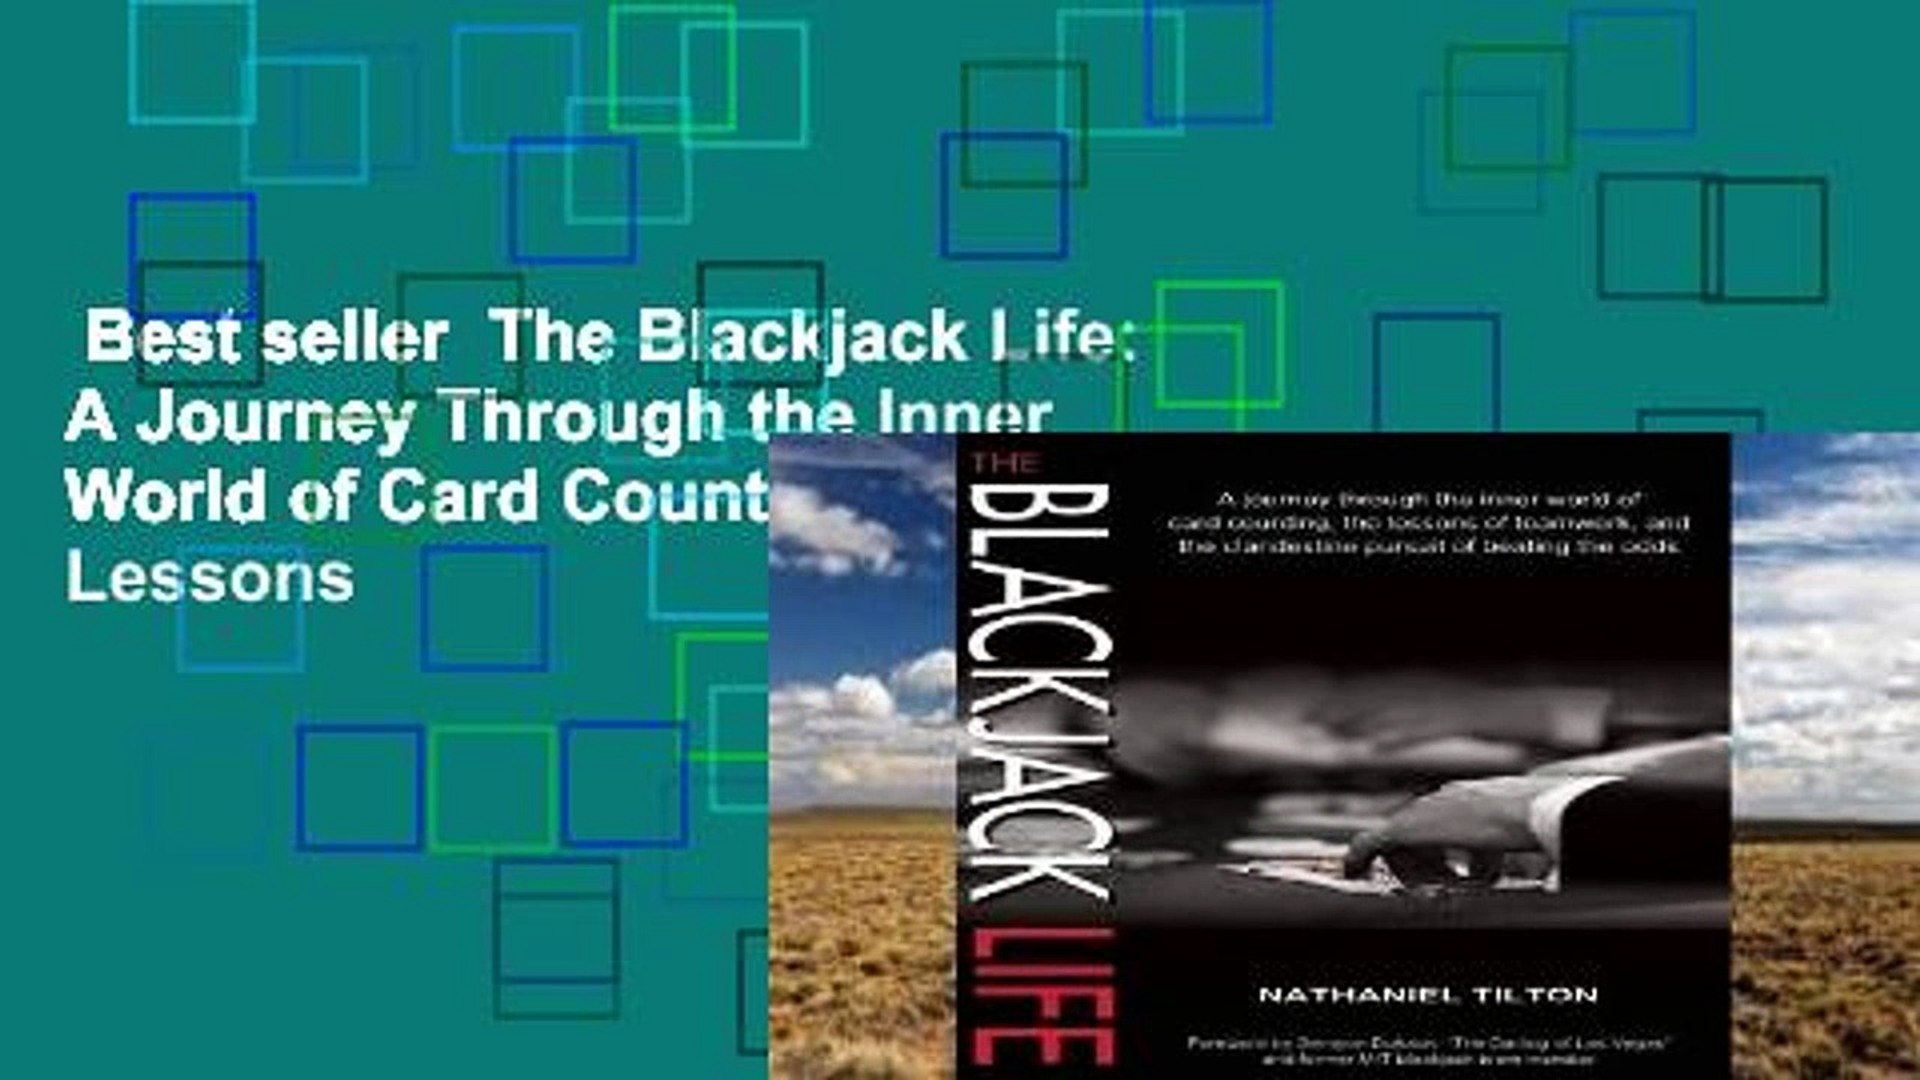 The blackjack life nathaniel tilton